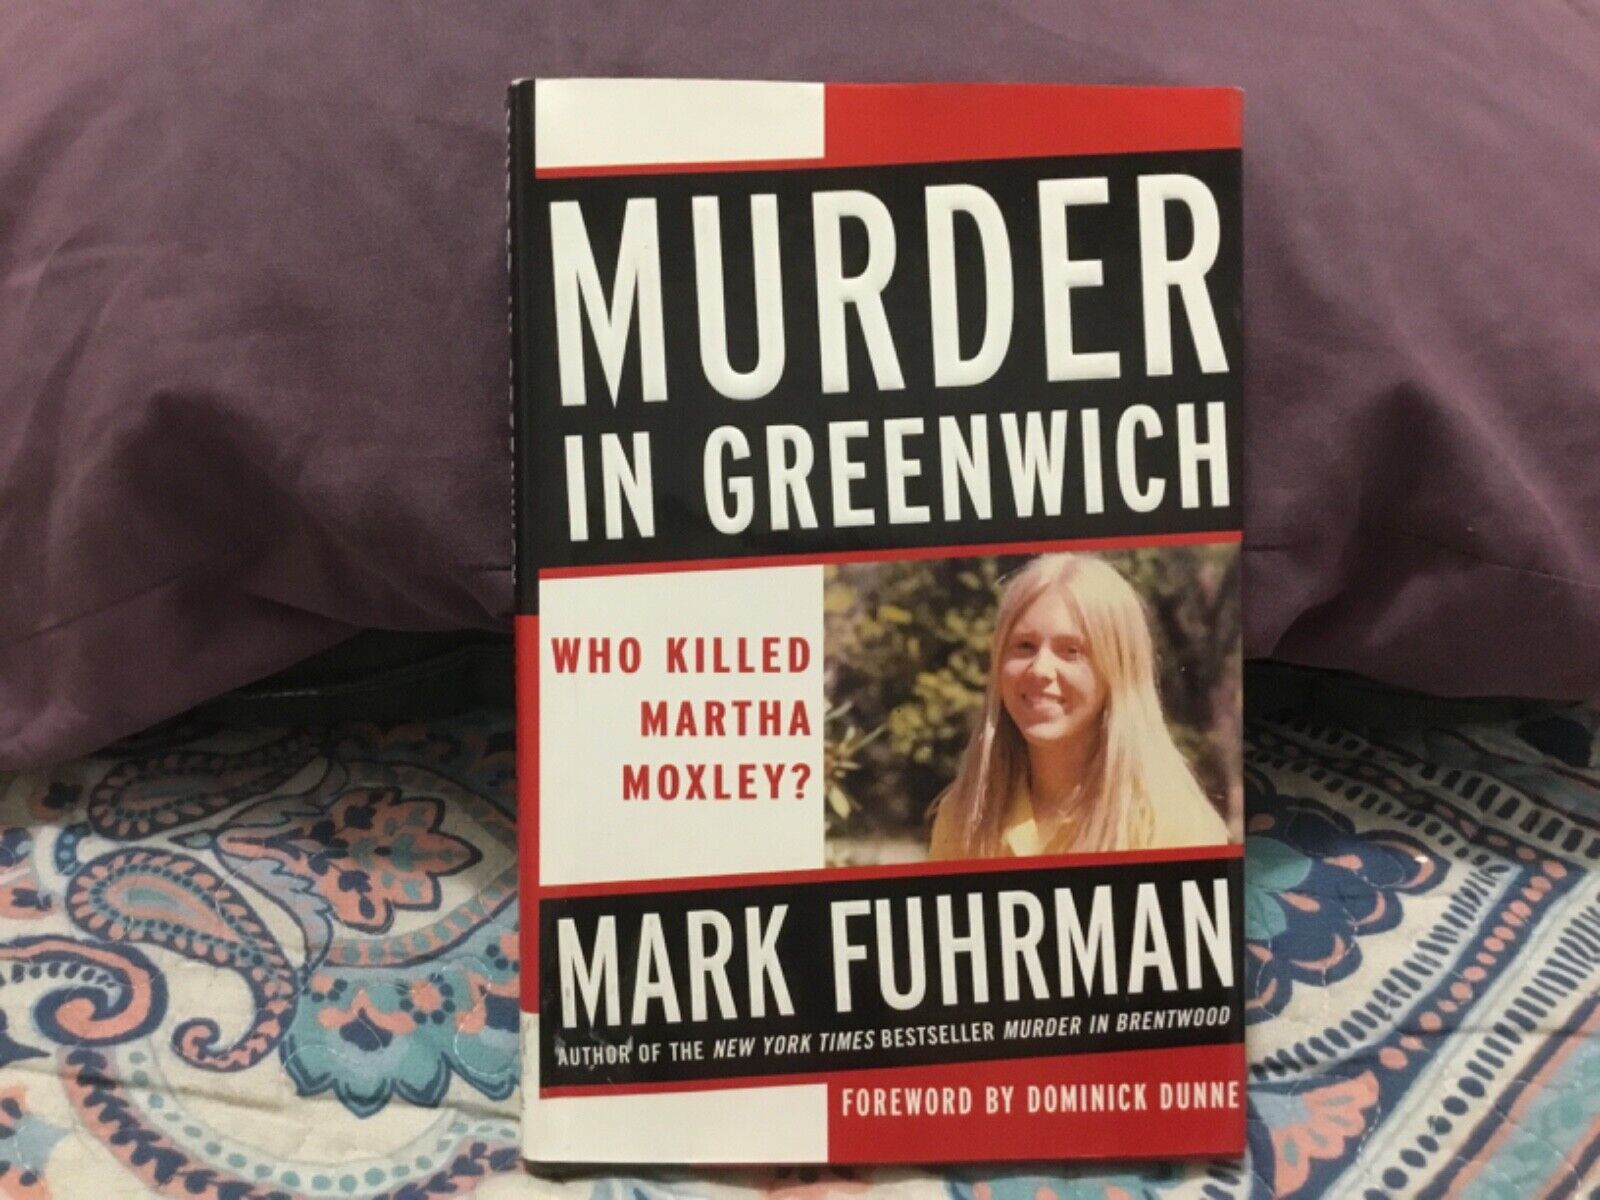 MARK FUHRMAN SIGNED TO DAVE FIRST EDITION BOOK MURDER IN GREENWICH-OJ SIMPSON